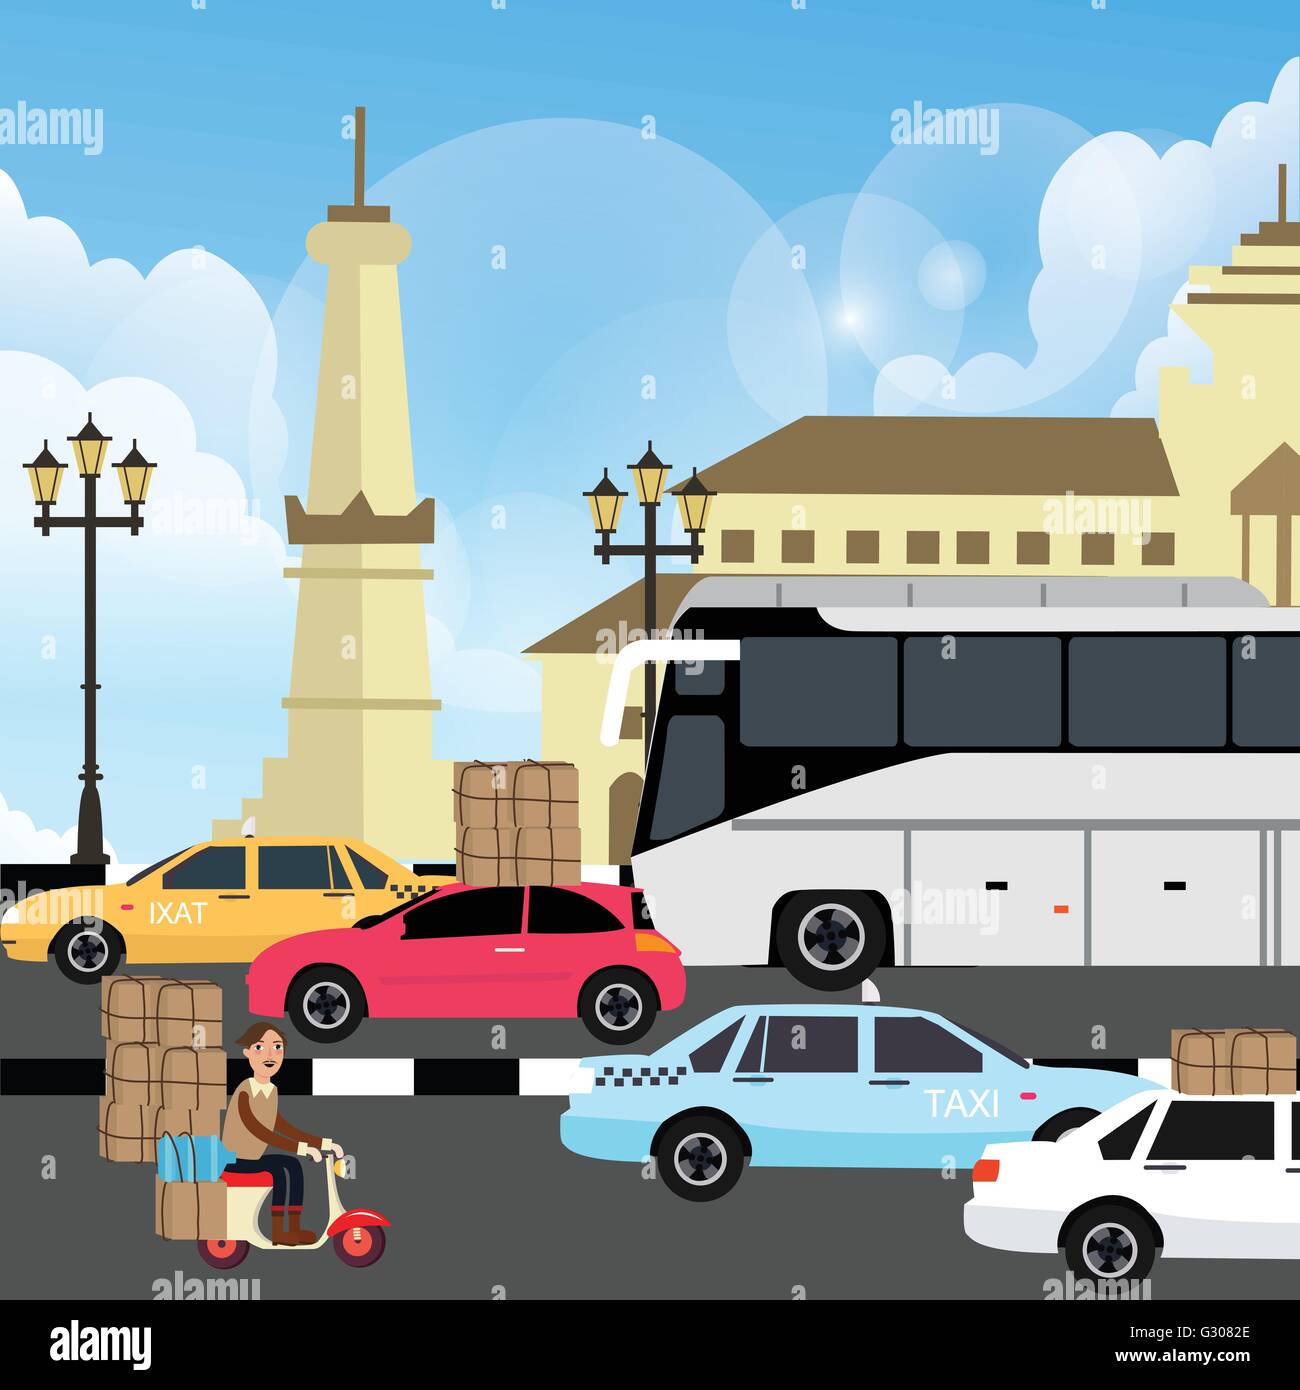 holiday vacation traffic jam congestion illustration in yogyakarta street indonesia Stock Vector